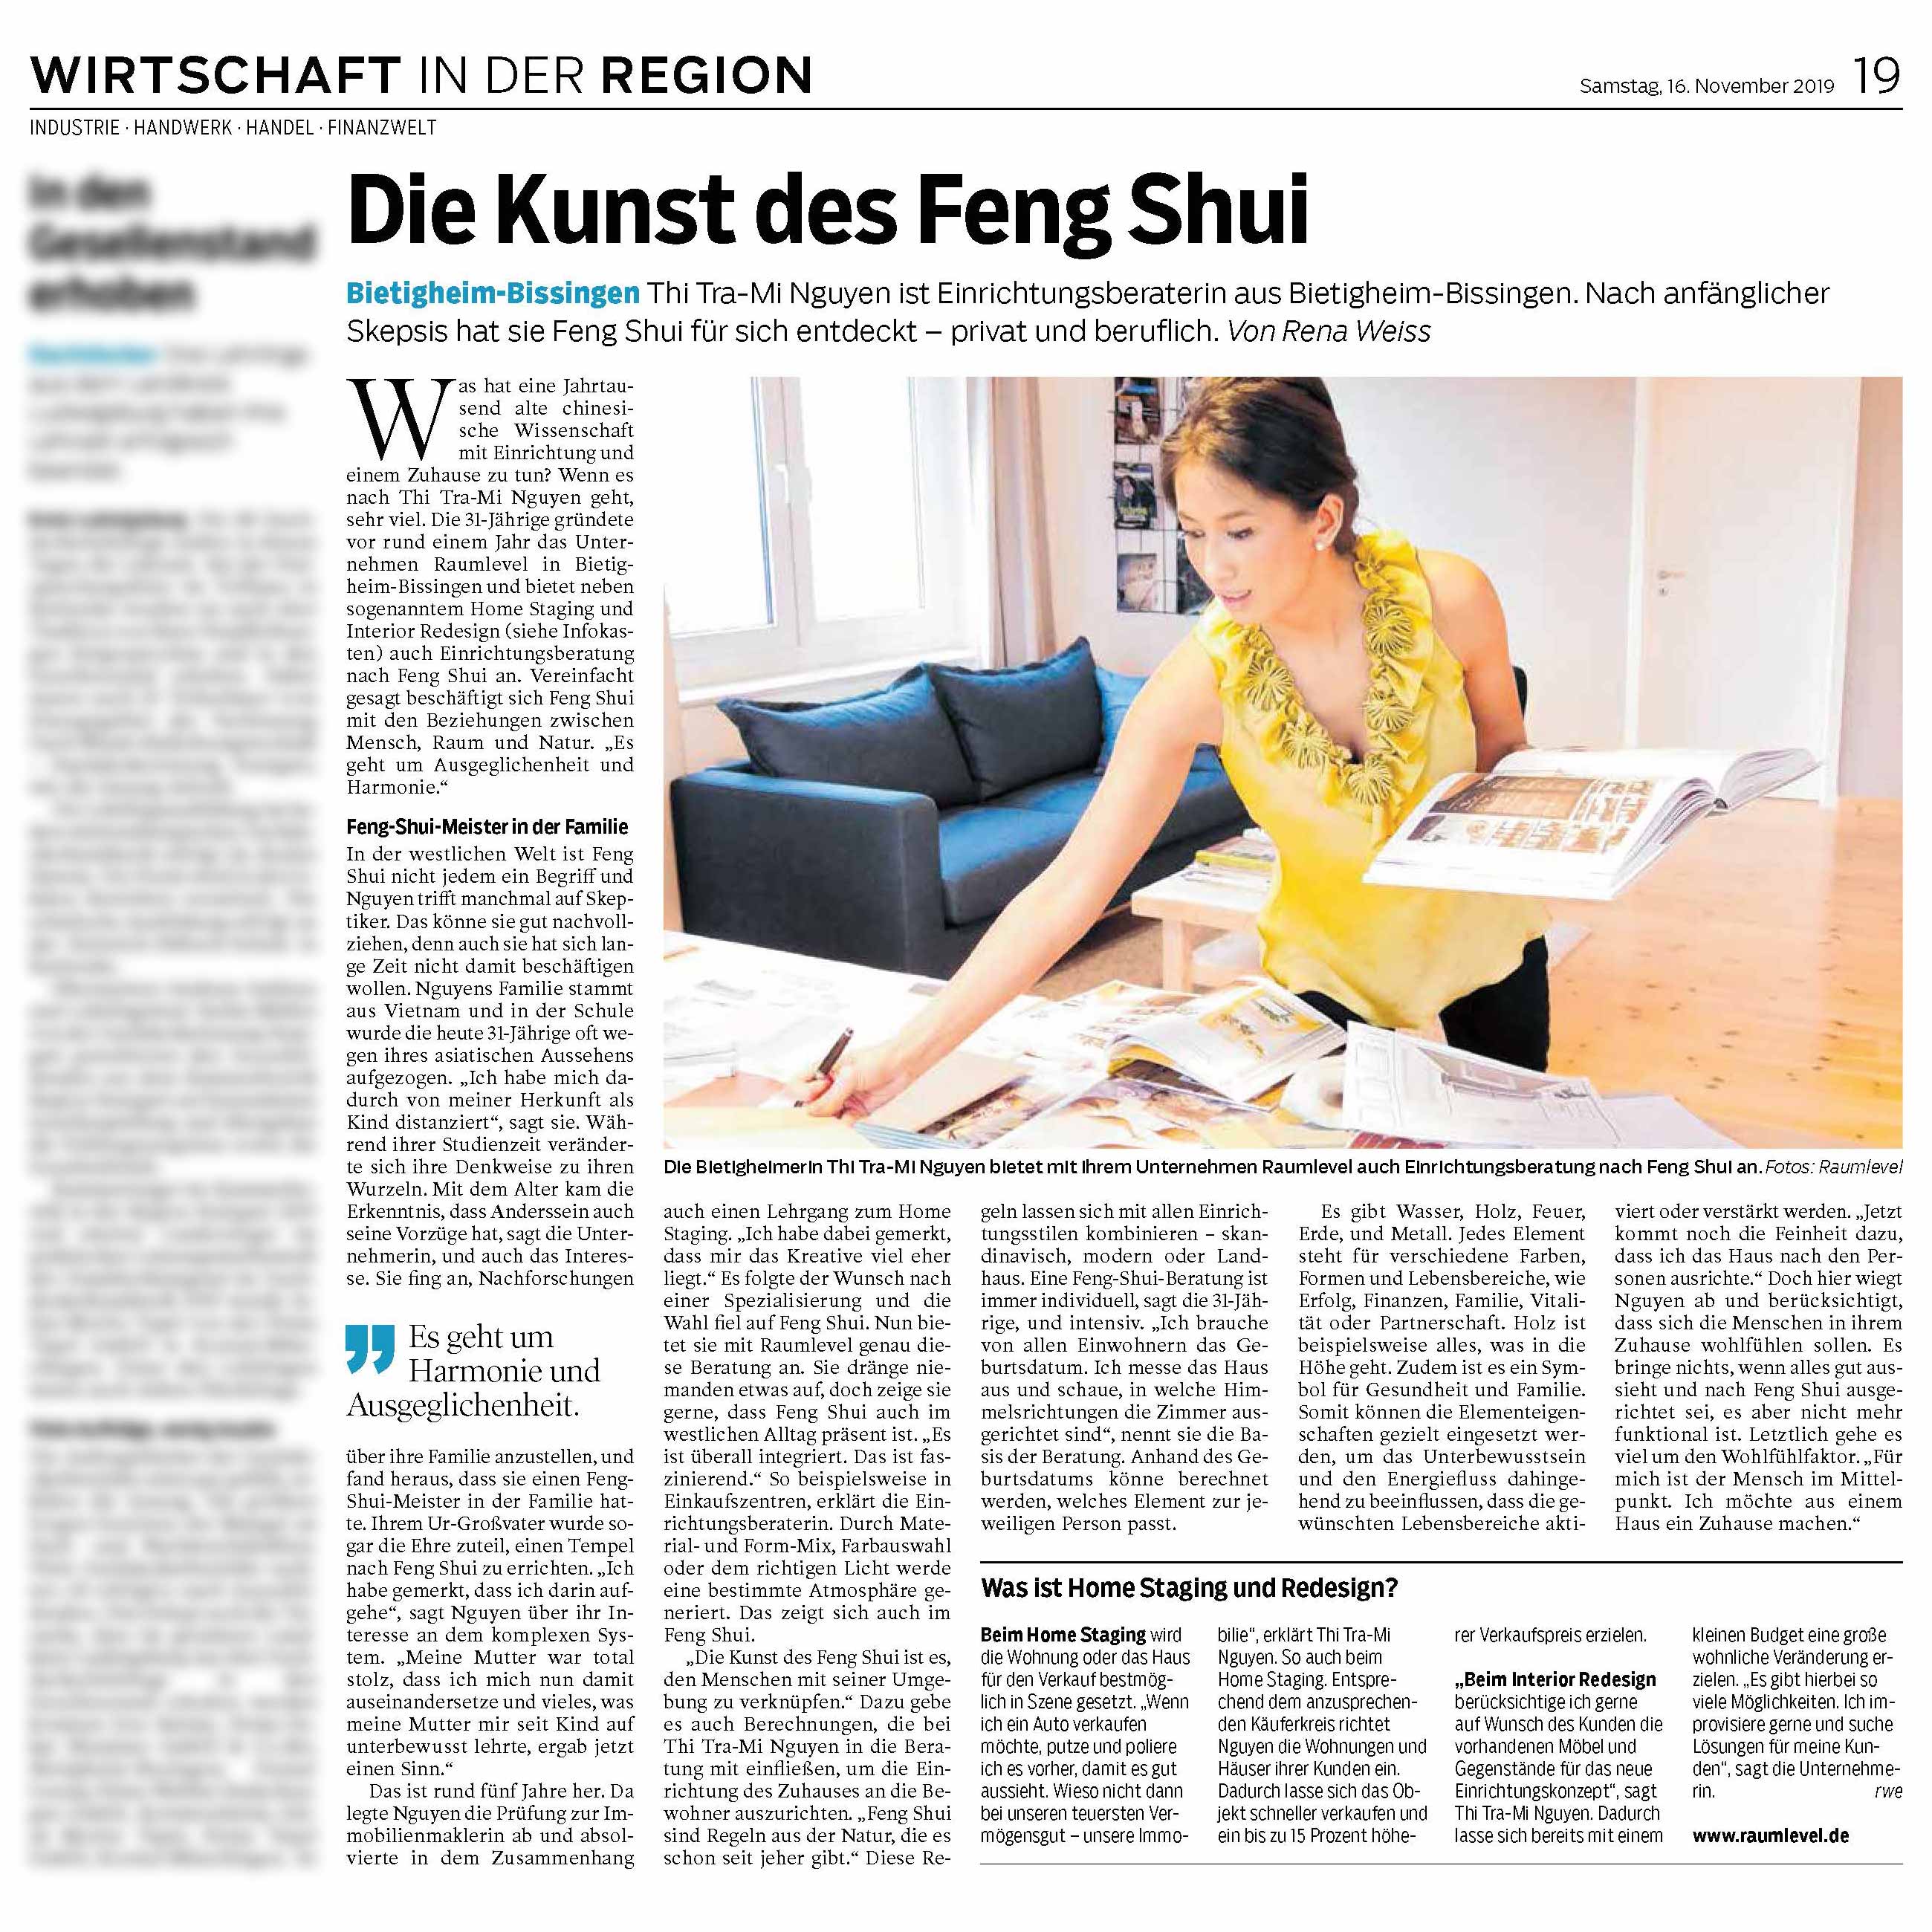 FENG SHUI Article in Bietigheimer Zeitung